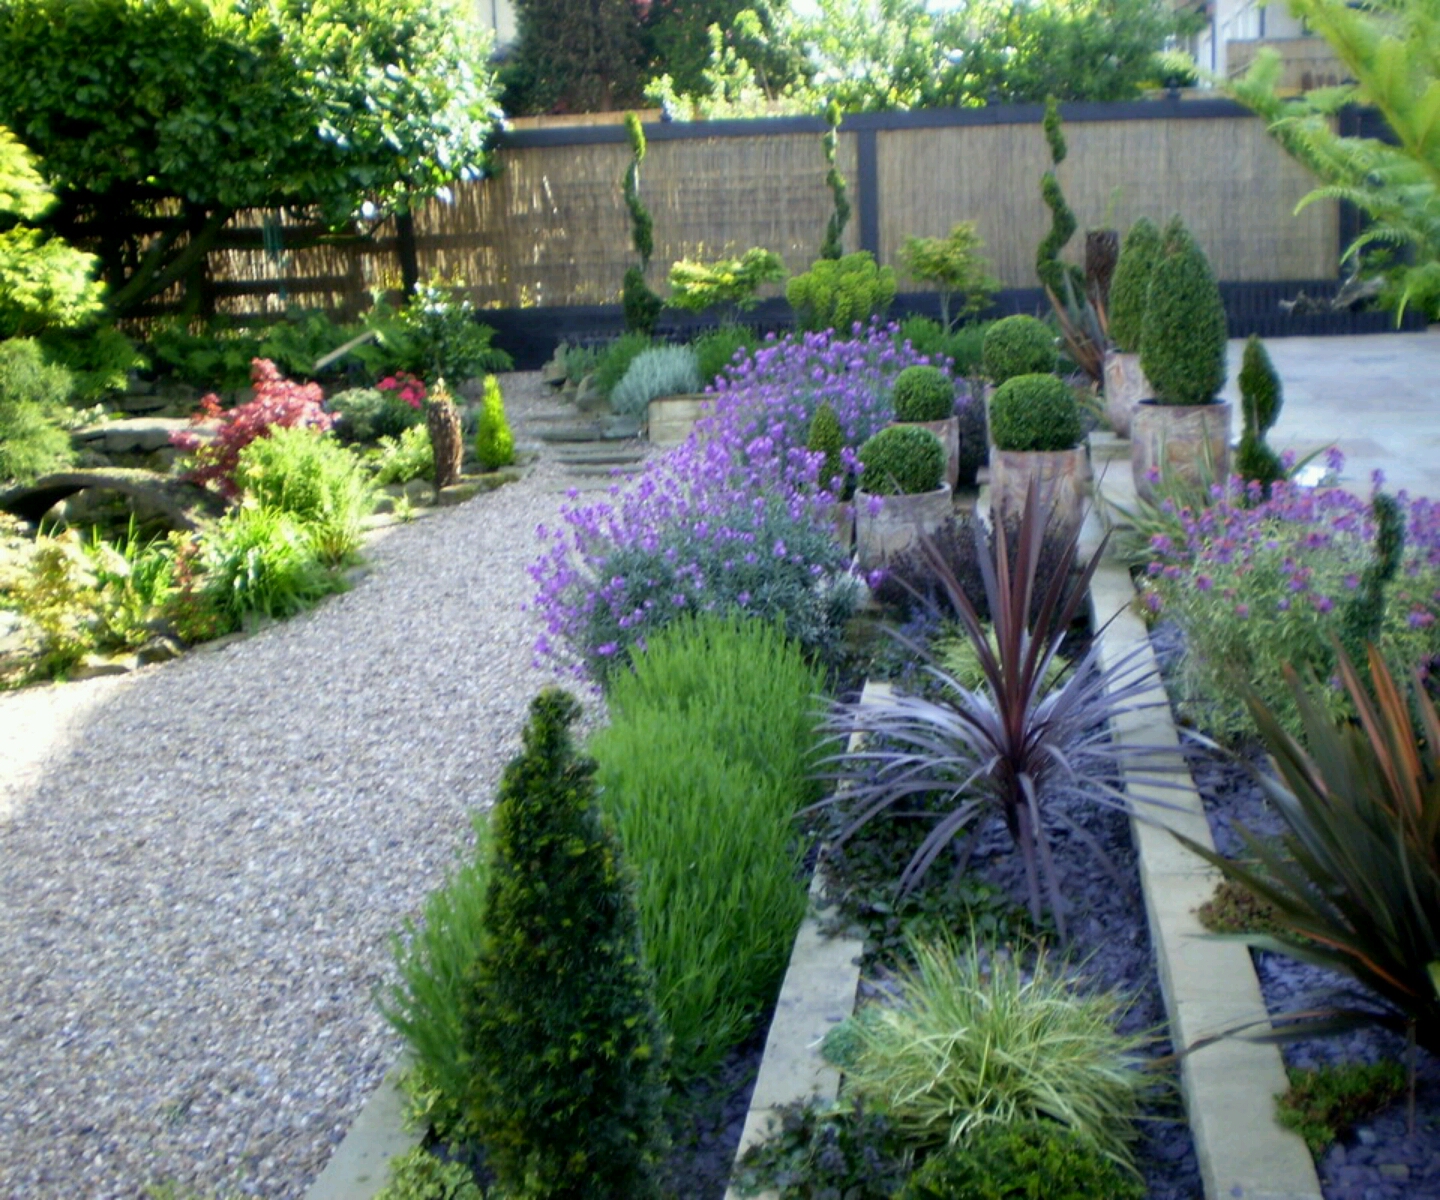 Modern beautiful home gardens designs ideas. | New home designs